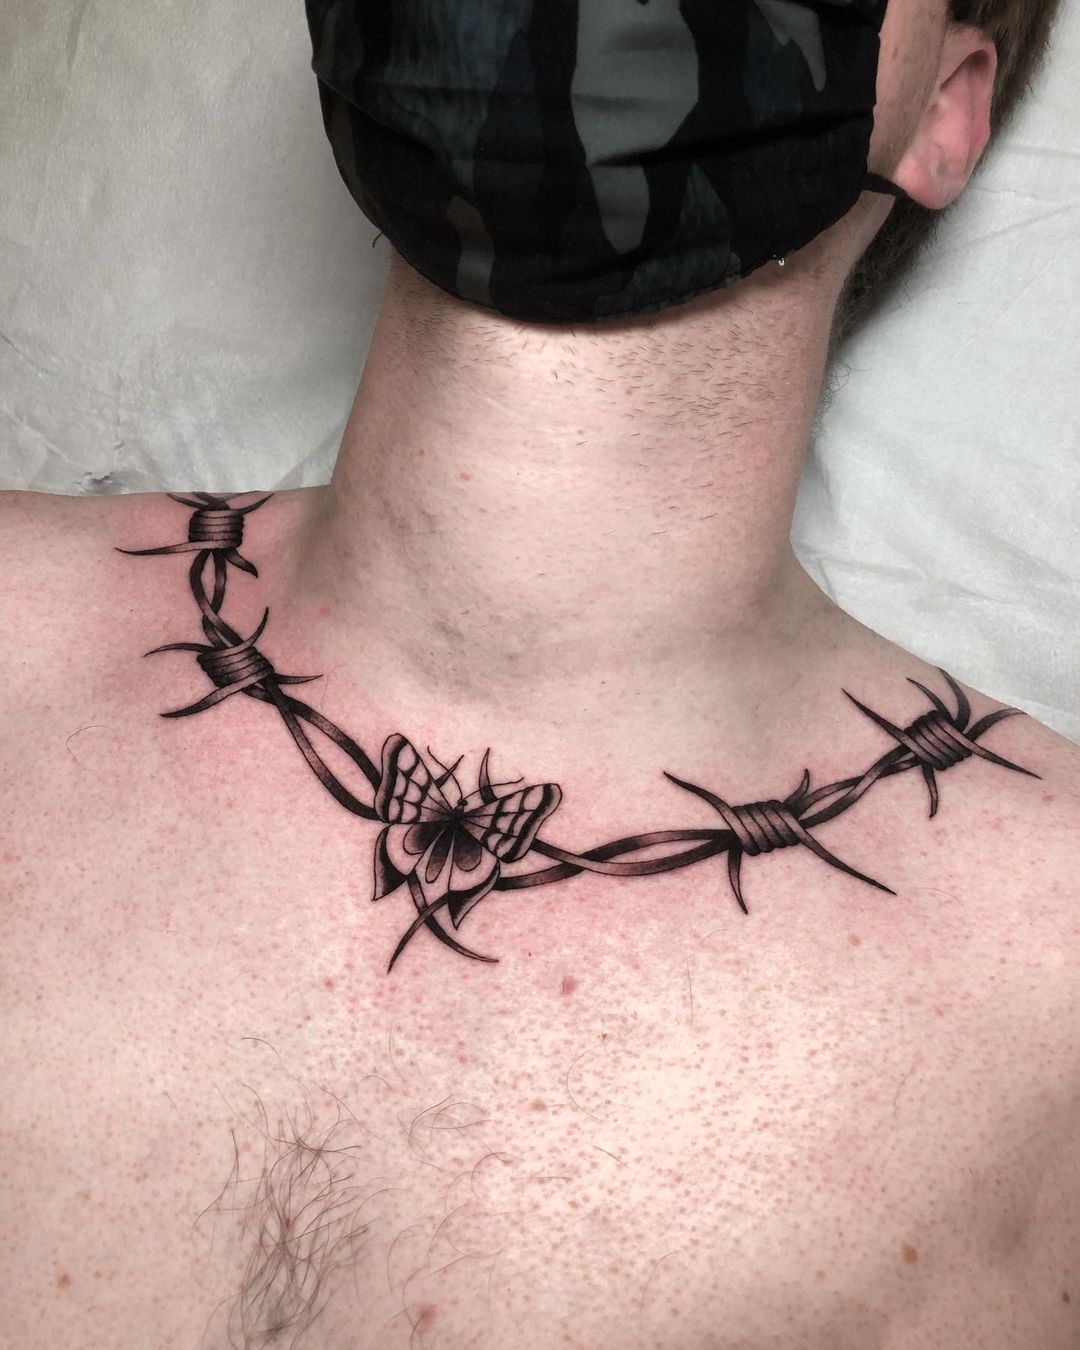 Tattoo uploaded by Chelsea Hopwood  Barbed wire tattoo collarbone  collarbonetattoo barbedwired  Tattoodo